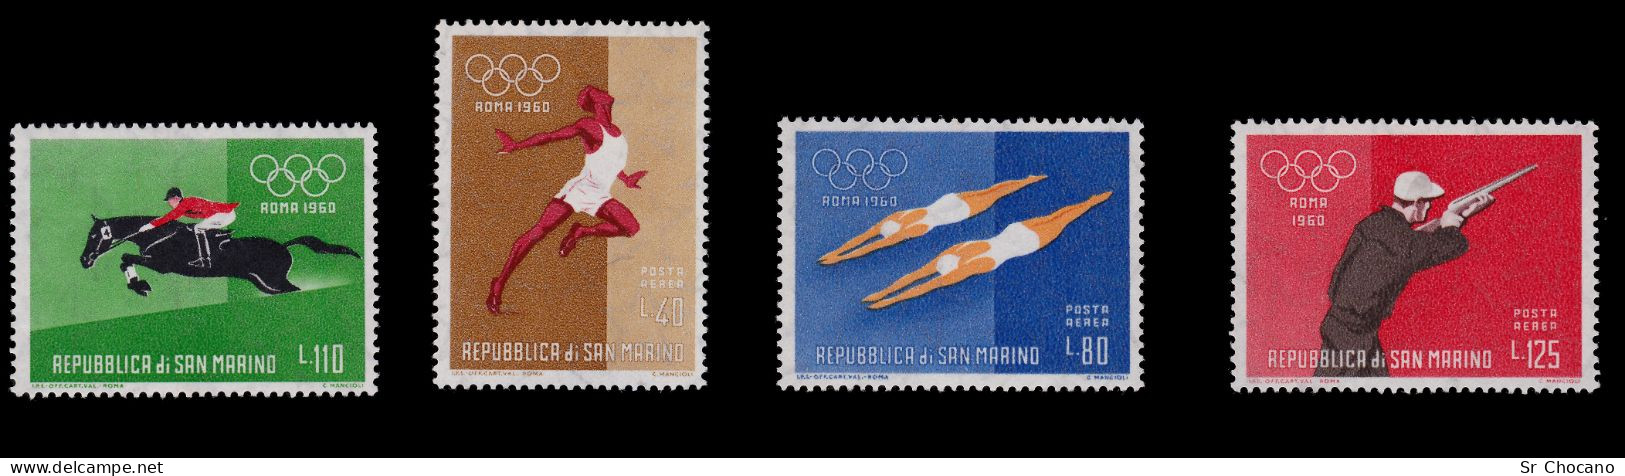 SAN MARINO STAMPS.1960.17th Olympic Games Rome.SCOTT 456-465,C111-C114.MNH. - Neufs